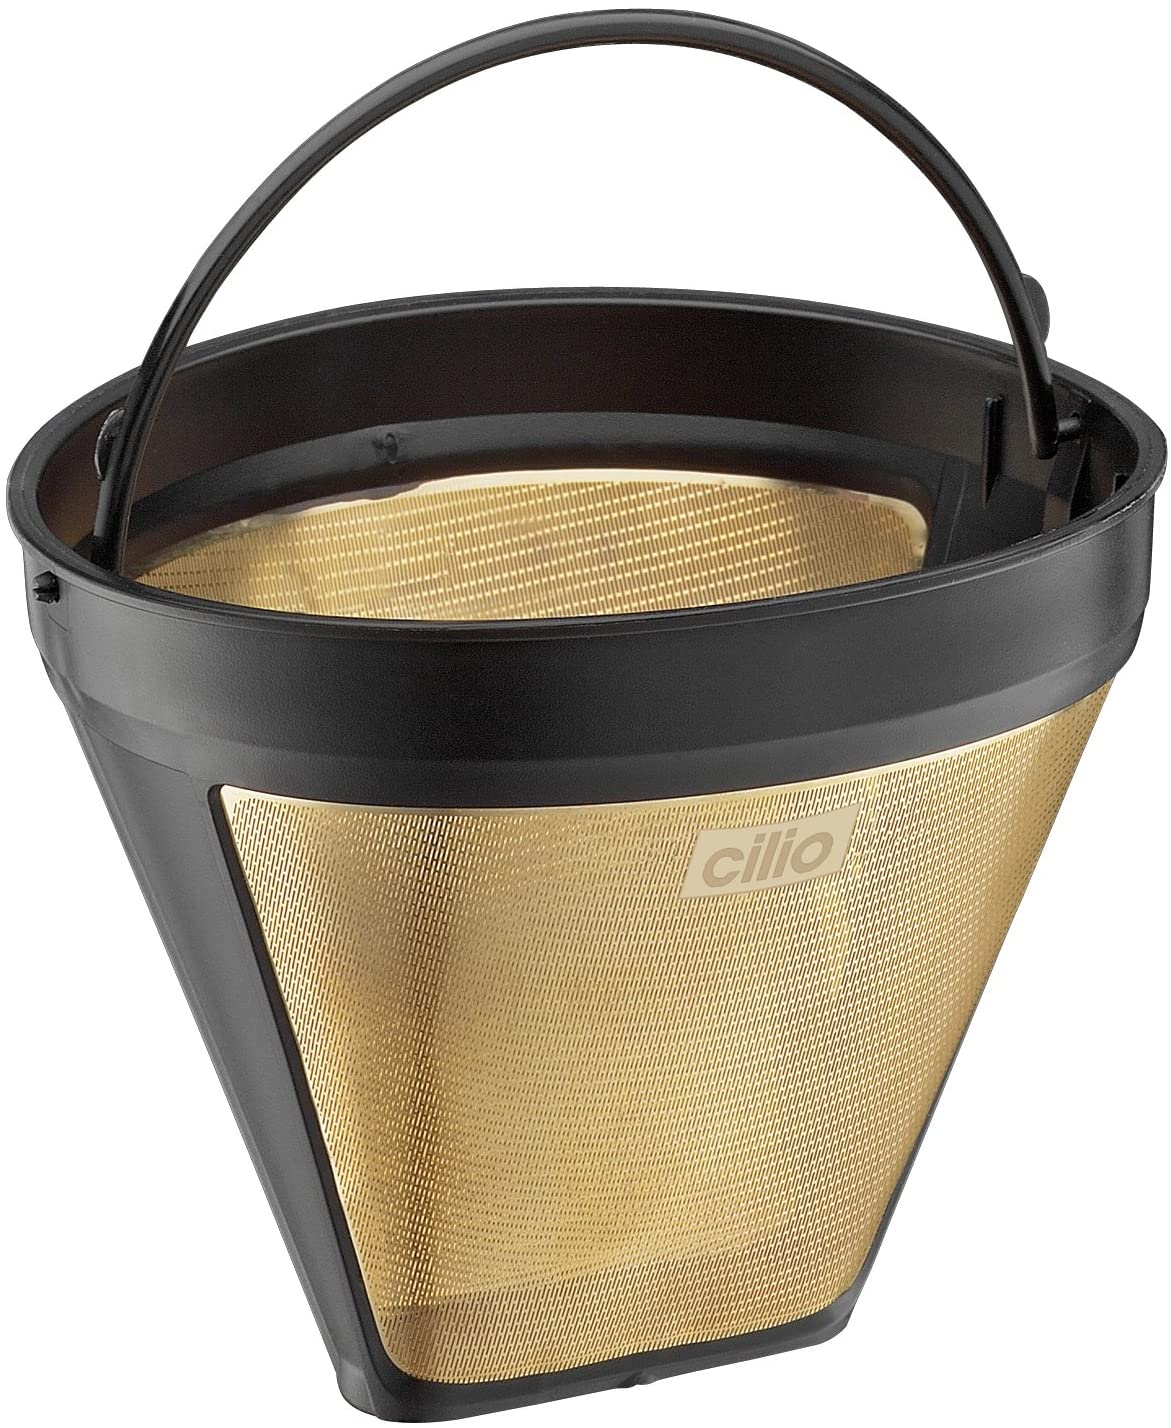 Cilio C116007 Coffee #4 Filter Gold